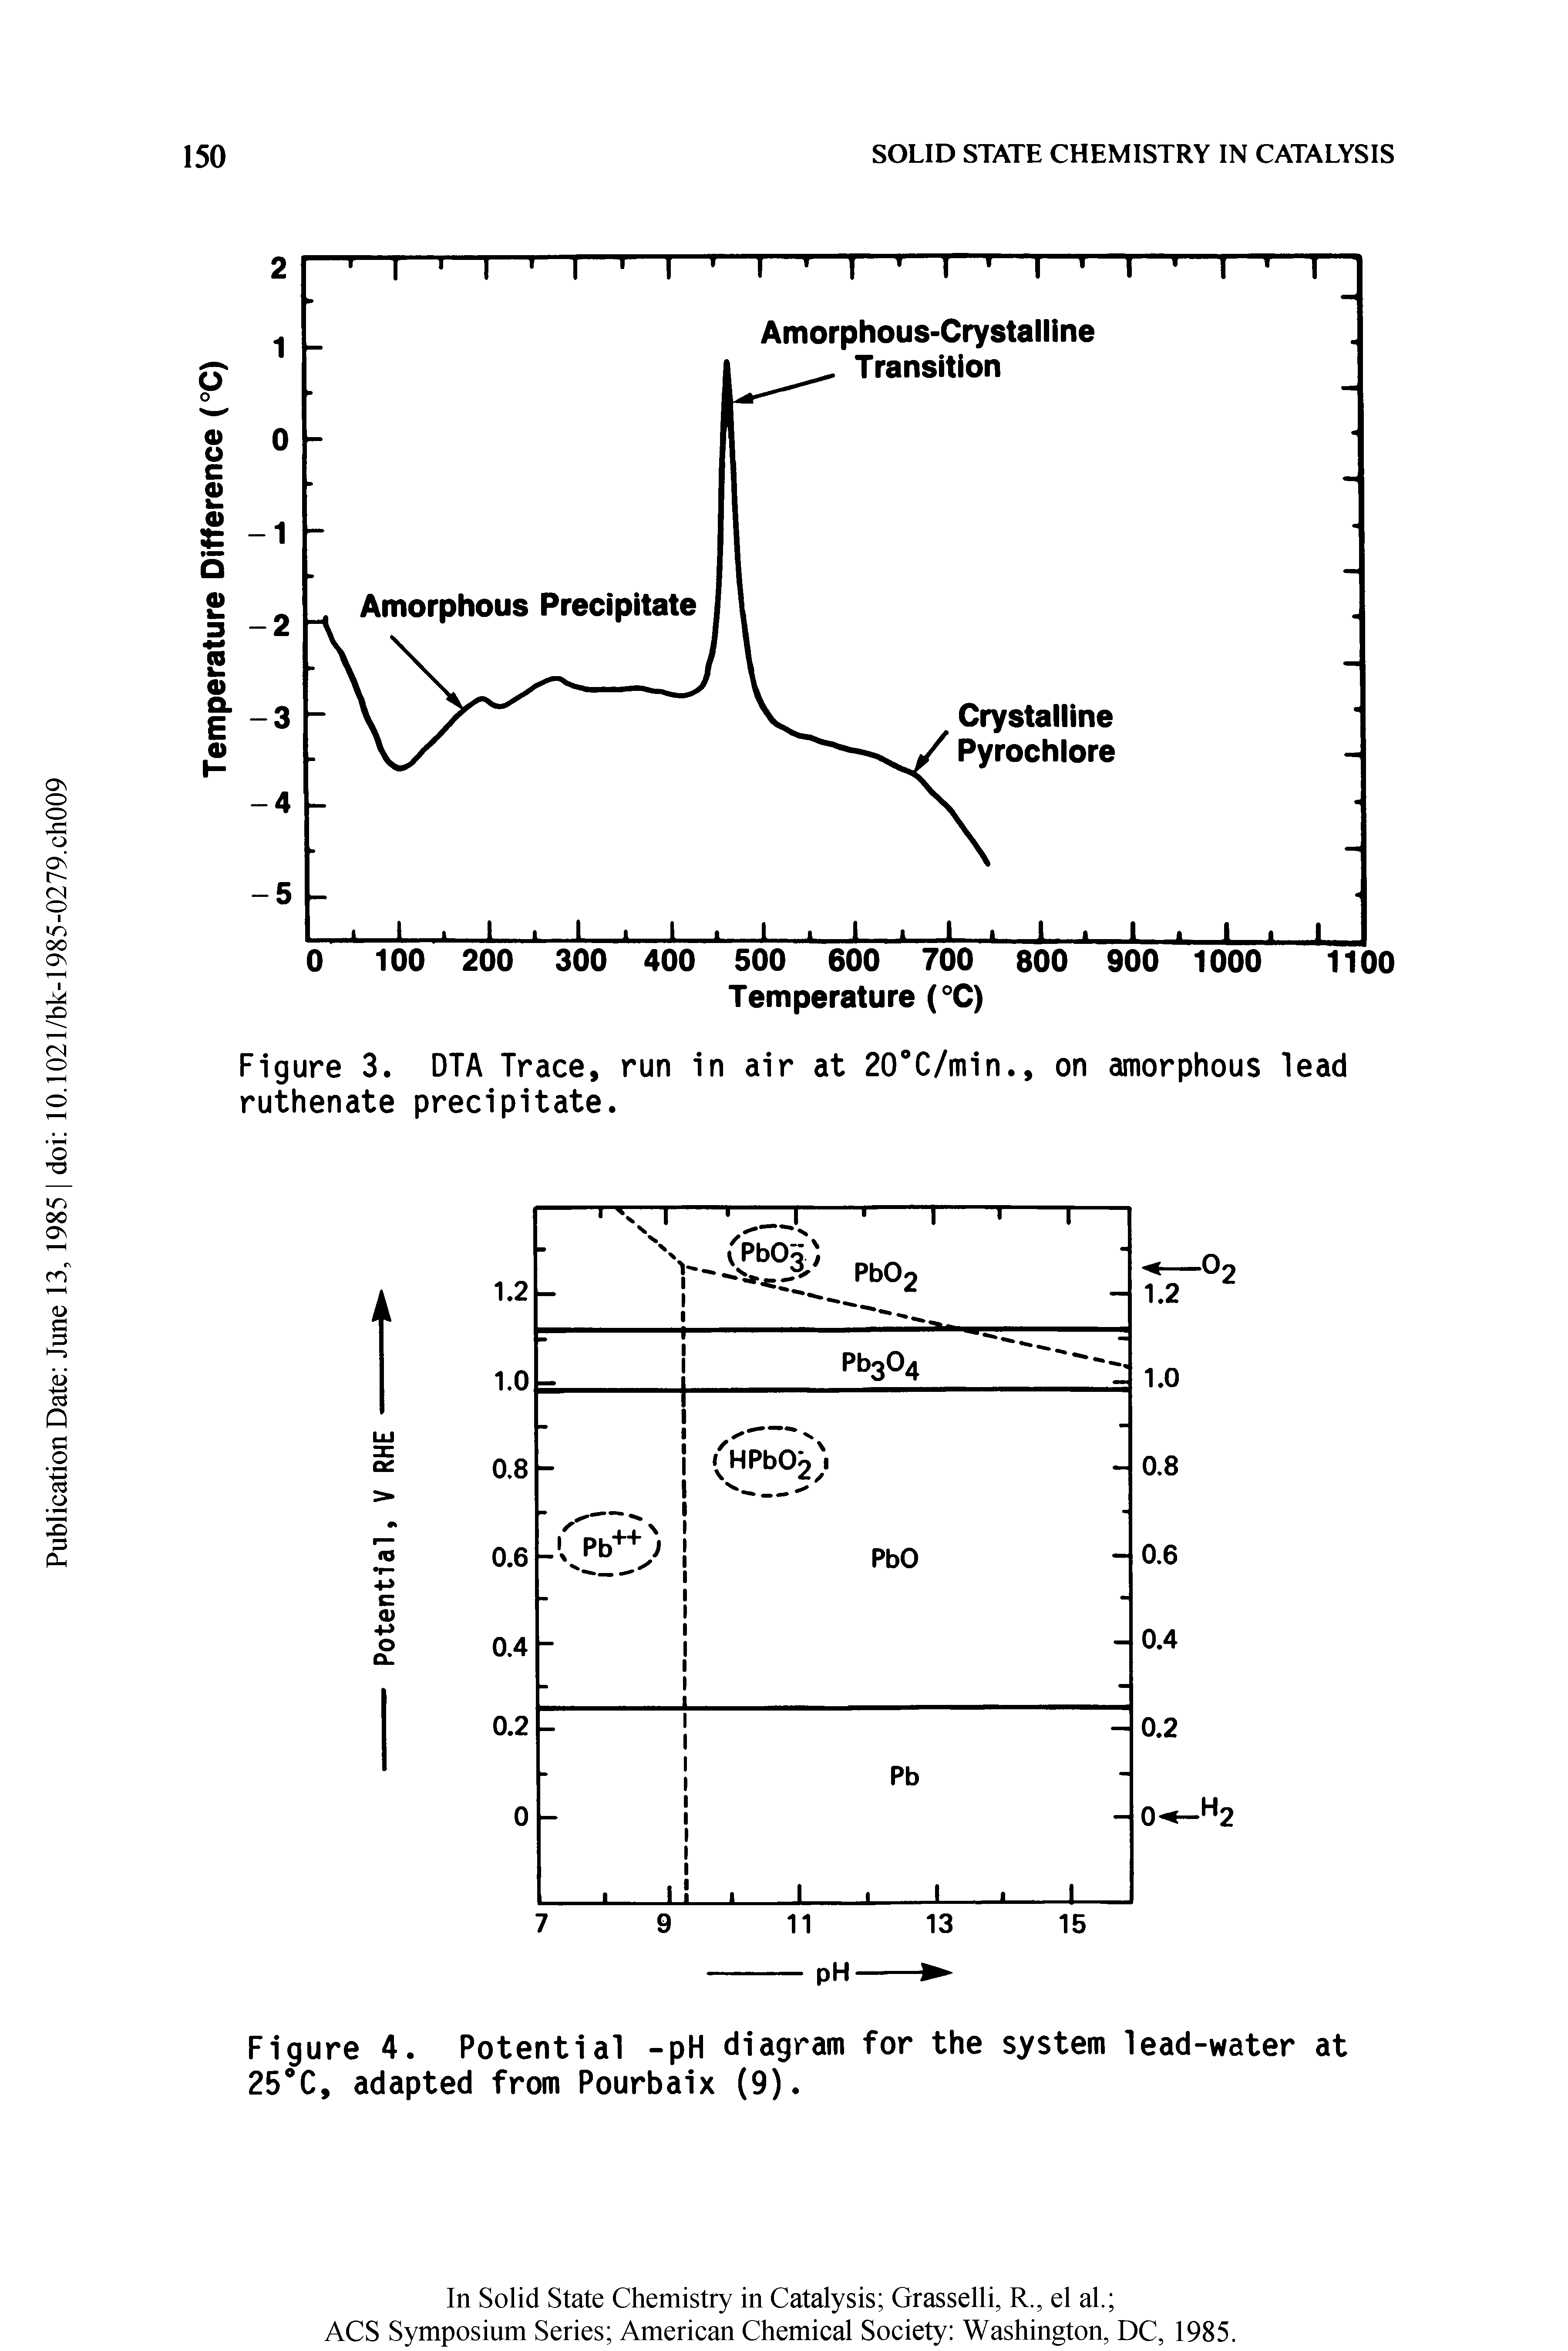 Figure 3. DTA Trace, run in air at 2O C/min., on amorphous lead ruthenate precipitate.